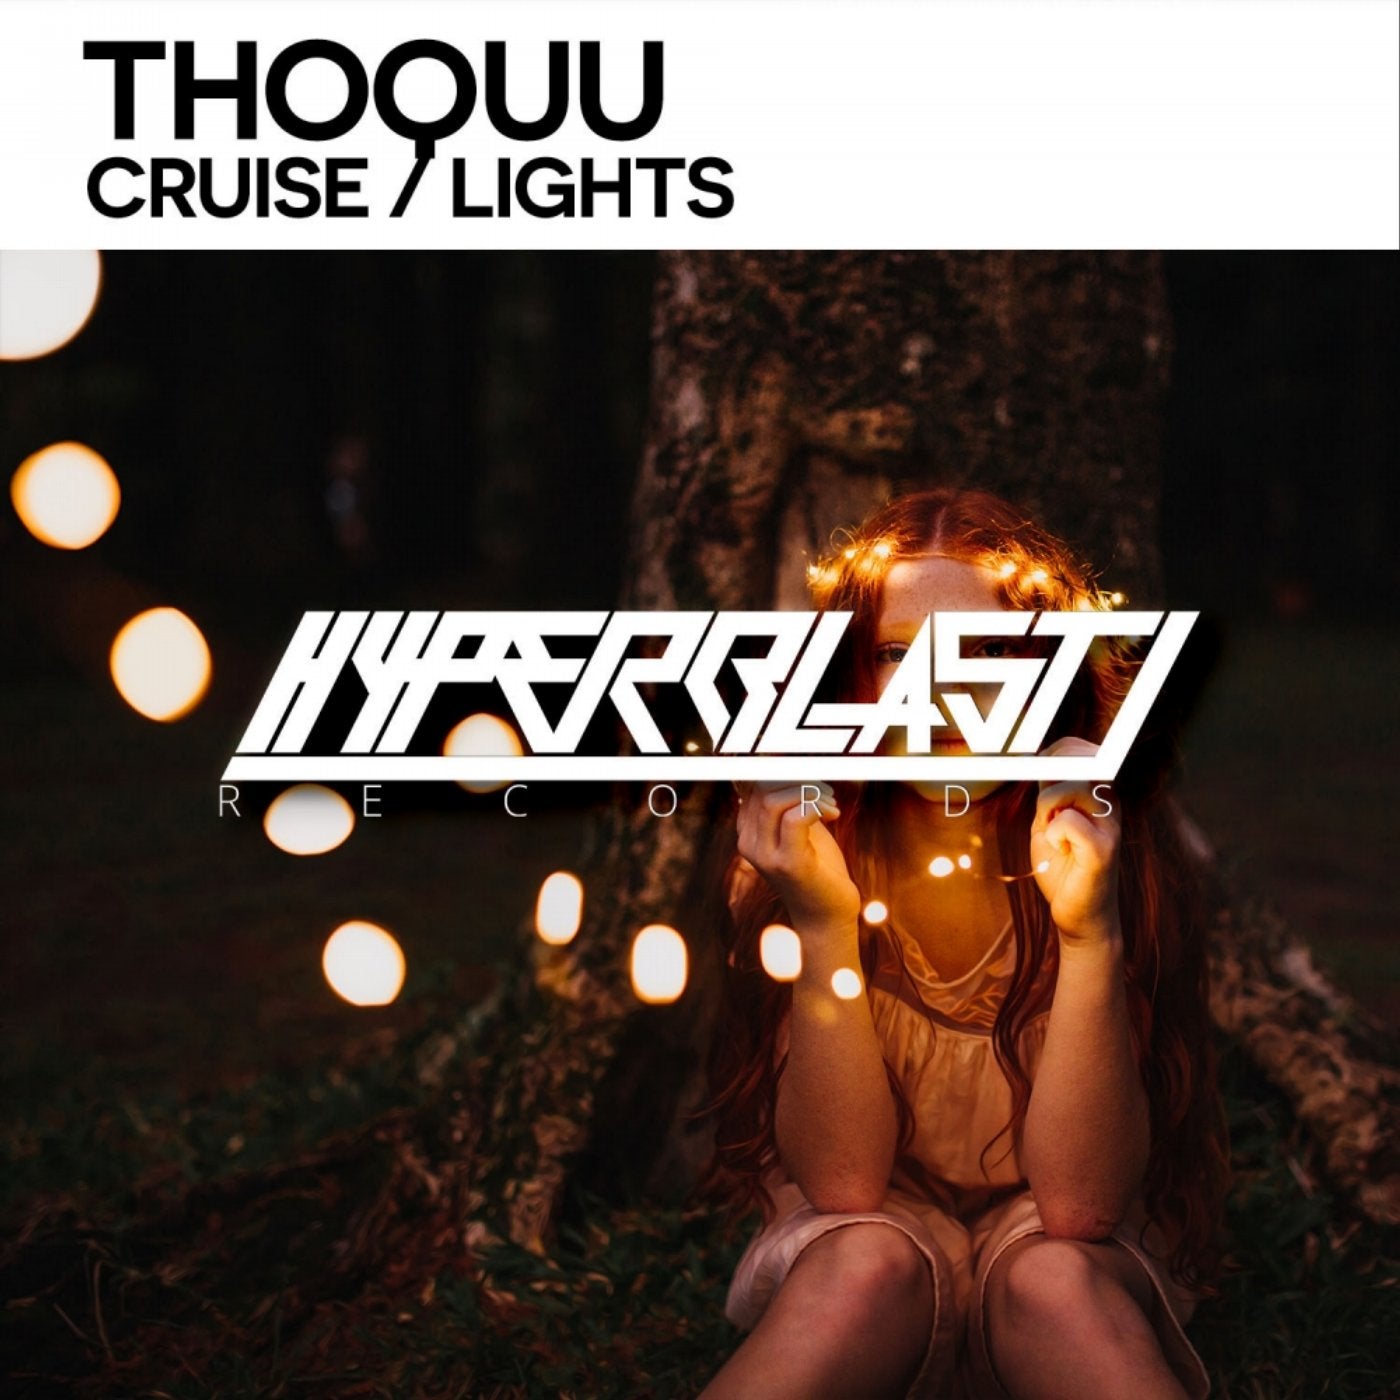 Cruise / Lights